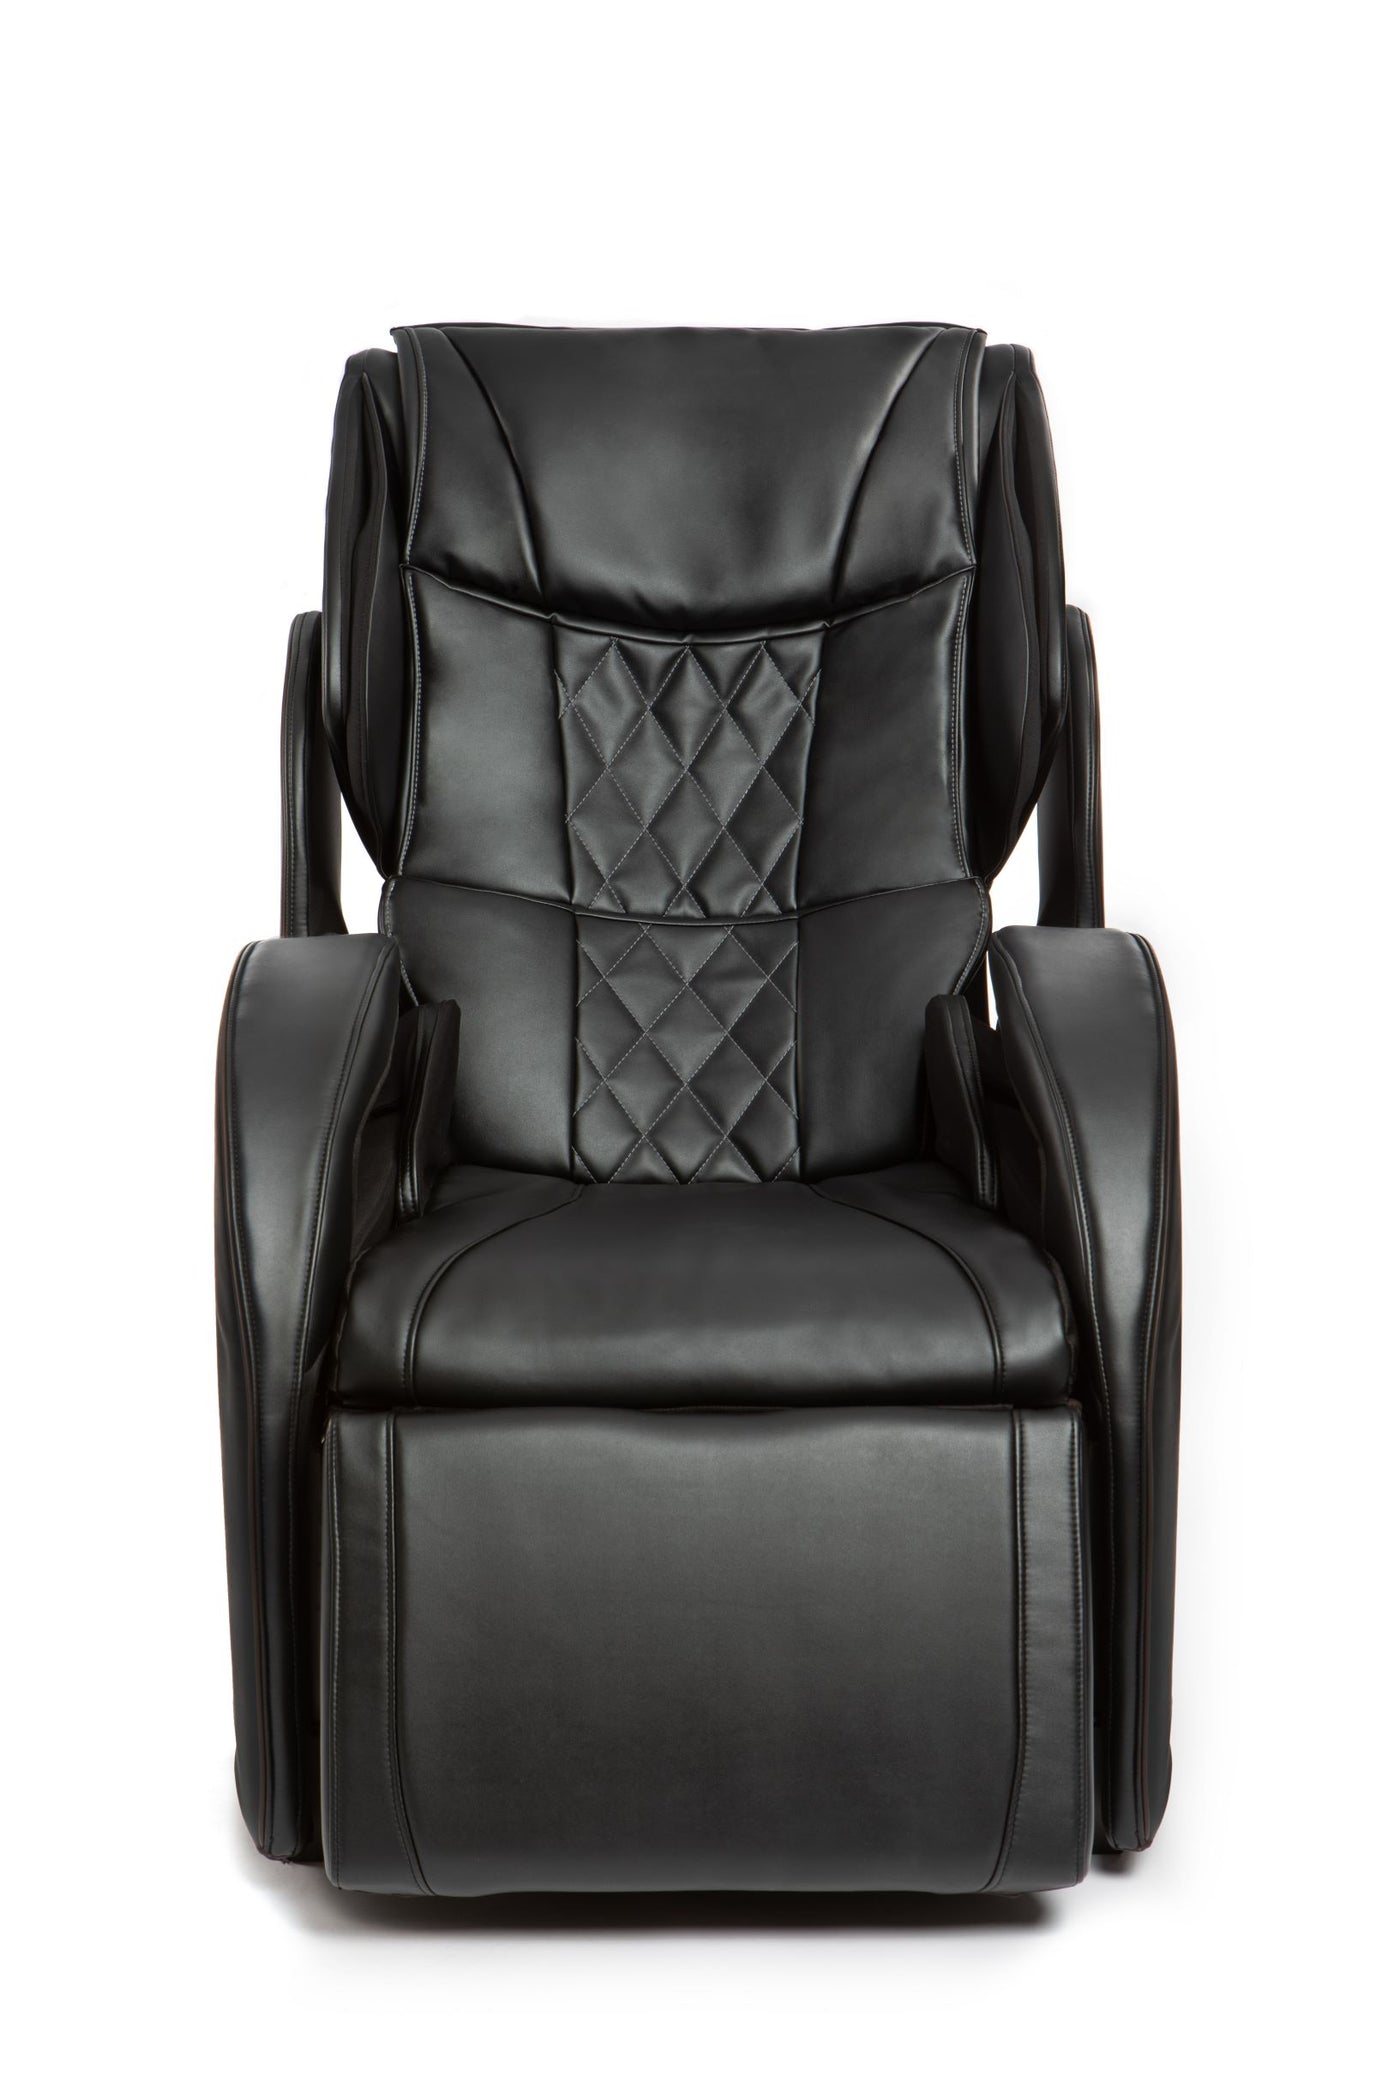 Panasonic Urban Elite Collection Massage Chair EPMAC8K - Black